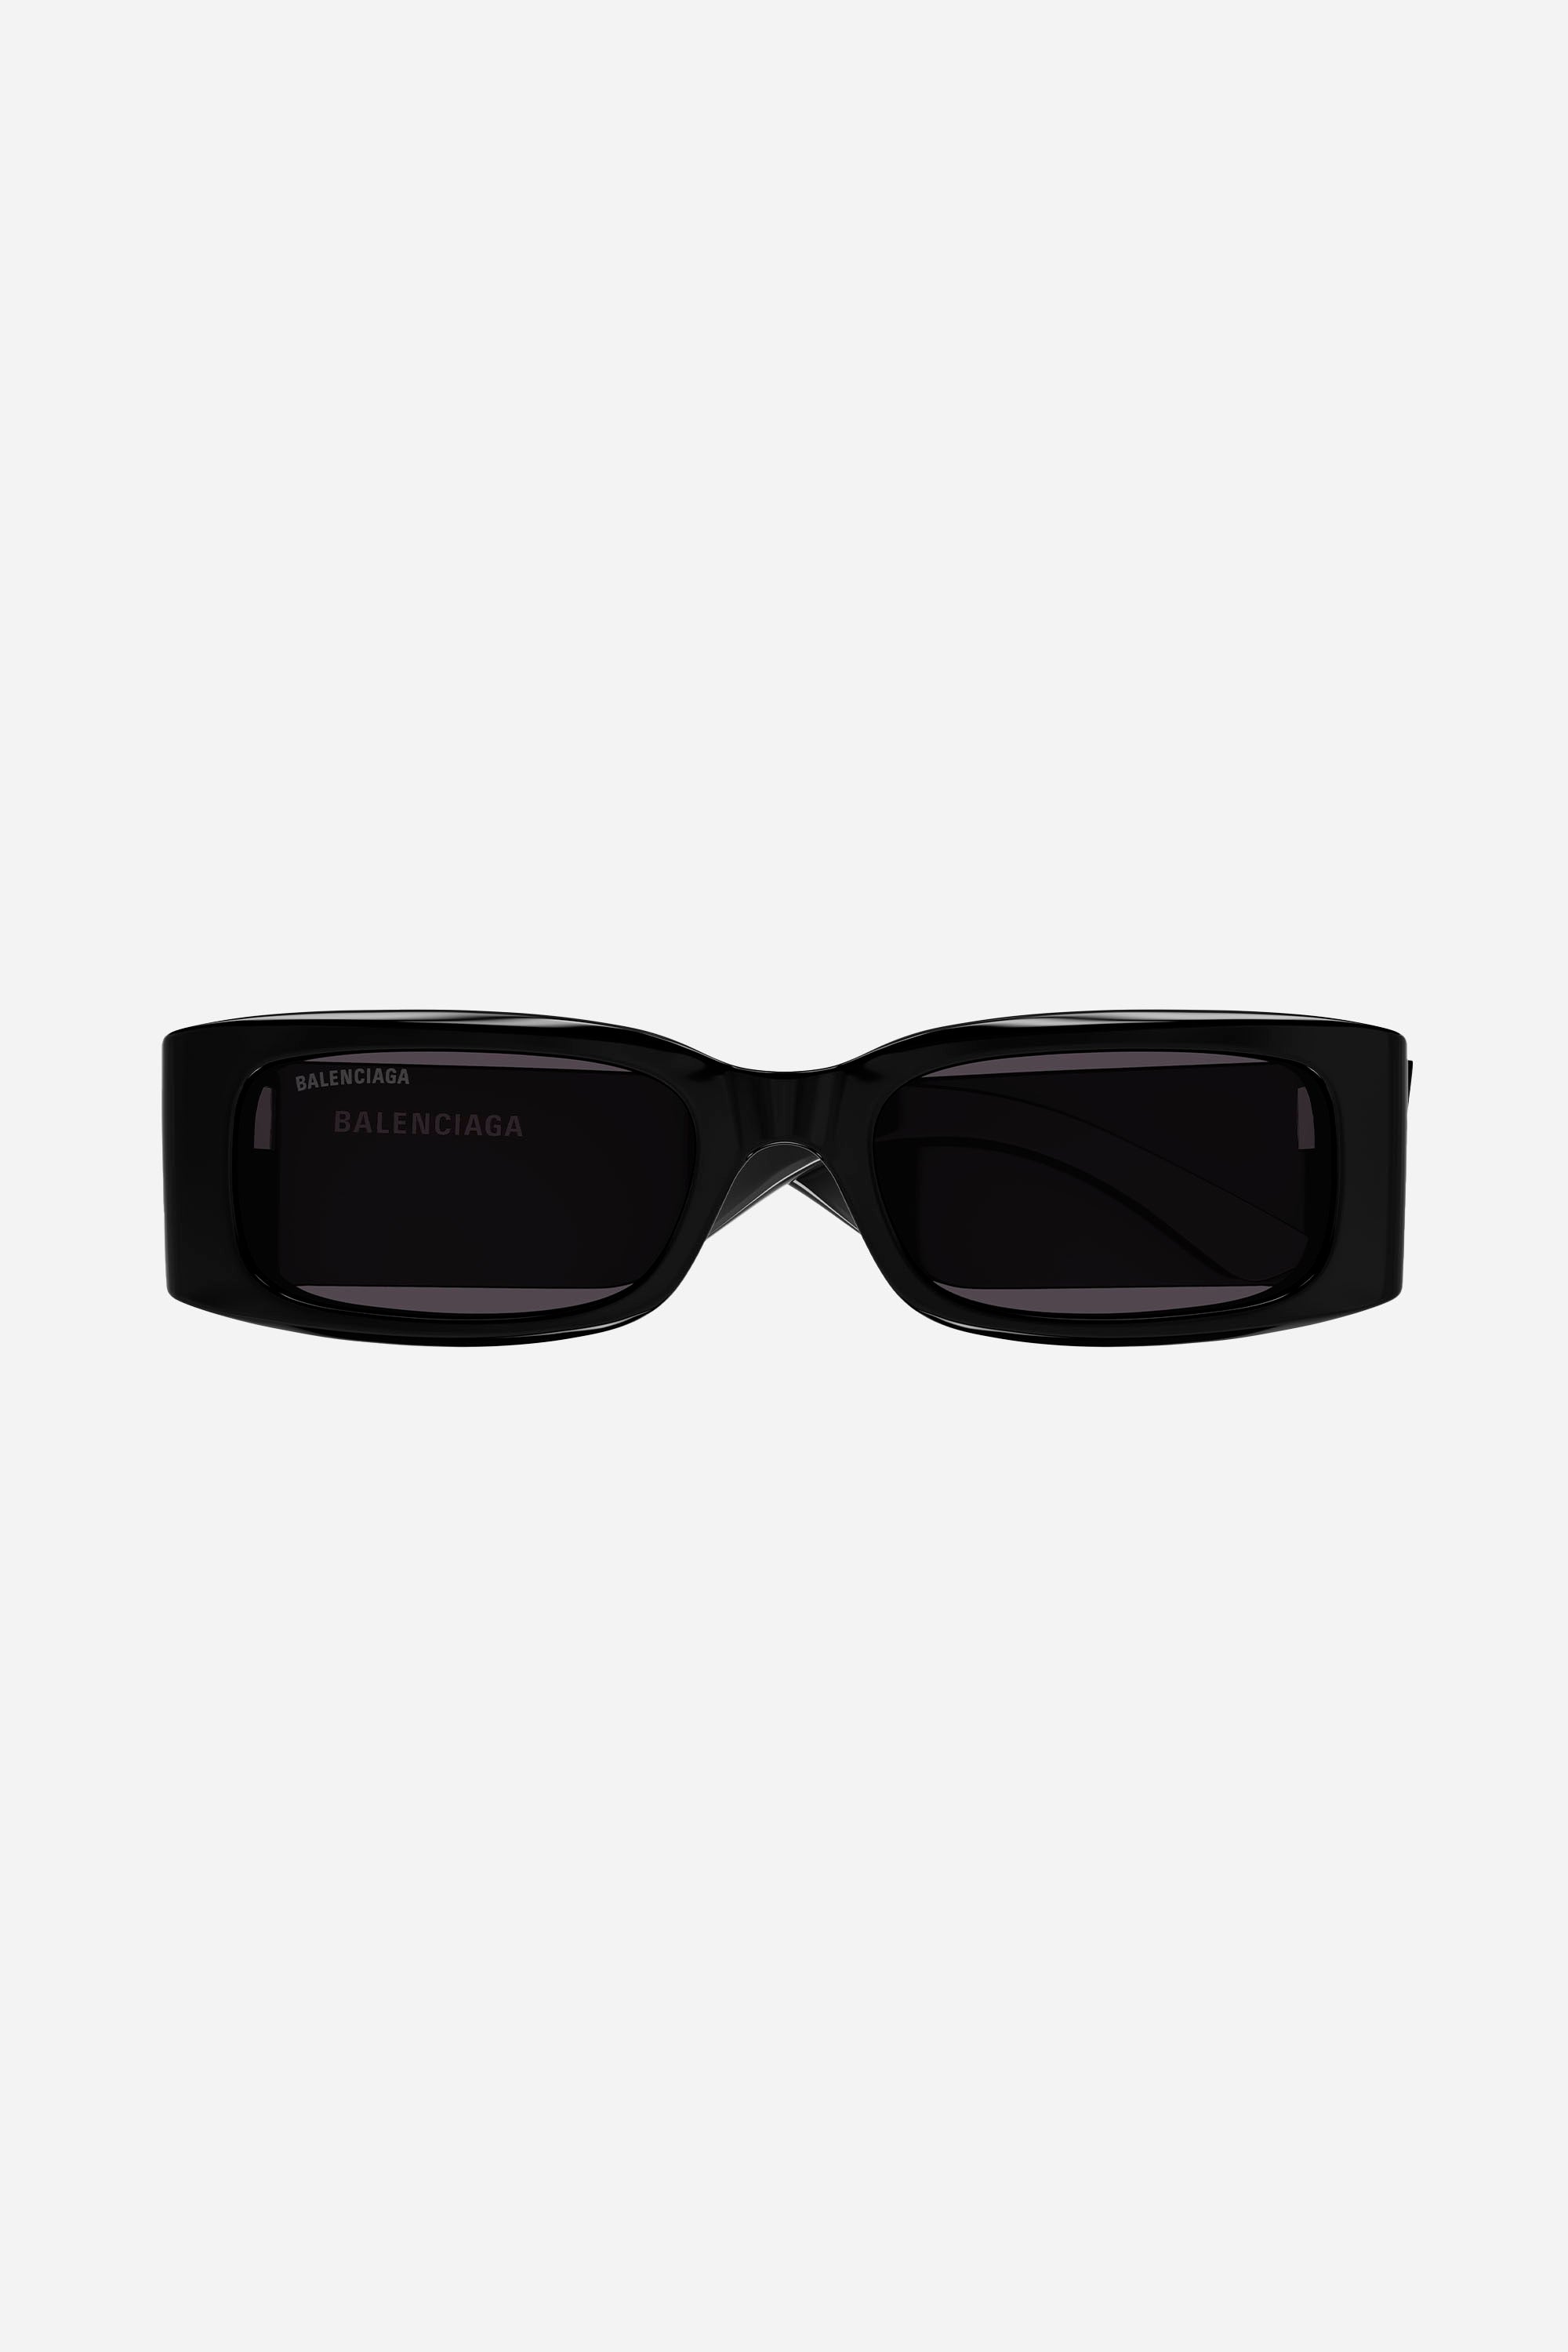 Balenciaga MAX rectangular flat sunglasses in black - Eyewear Club